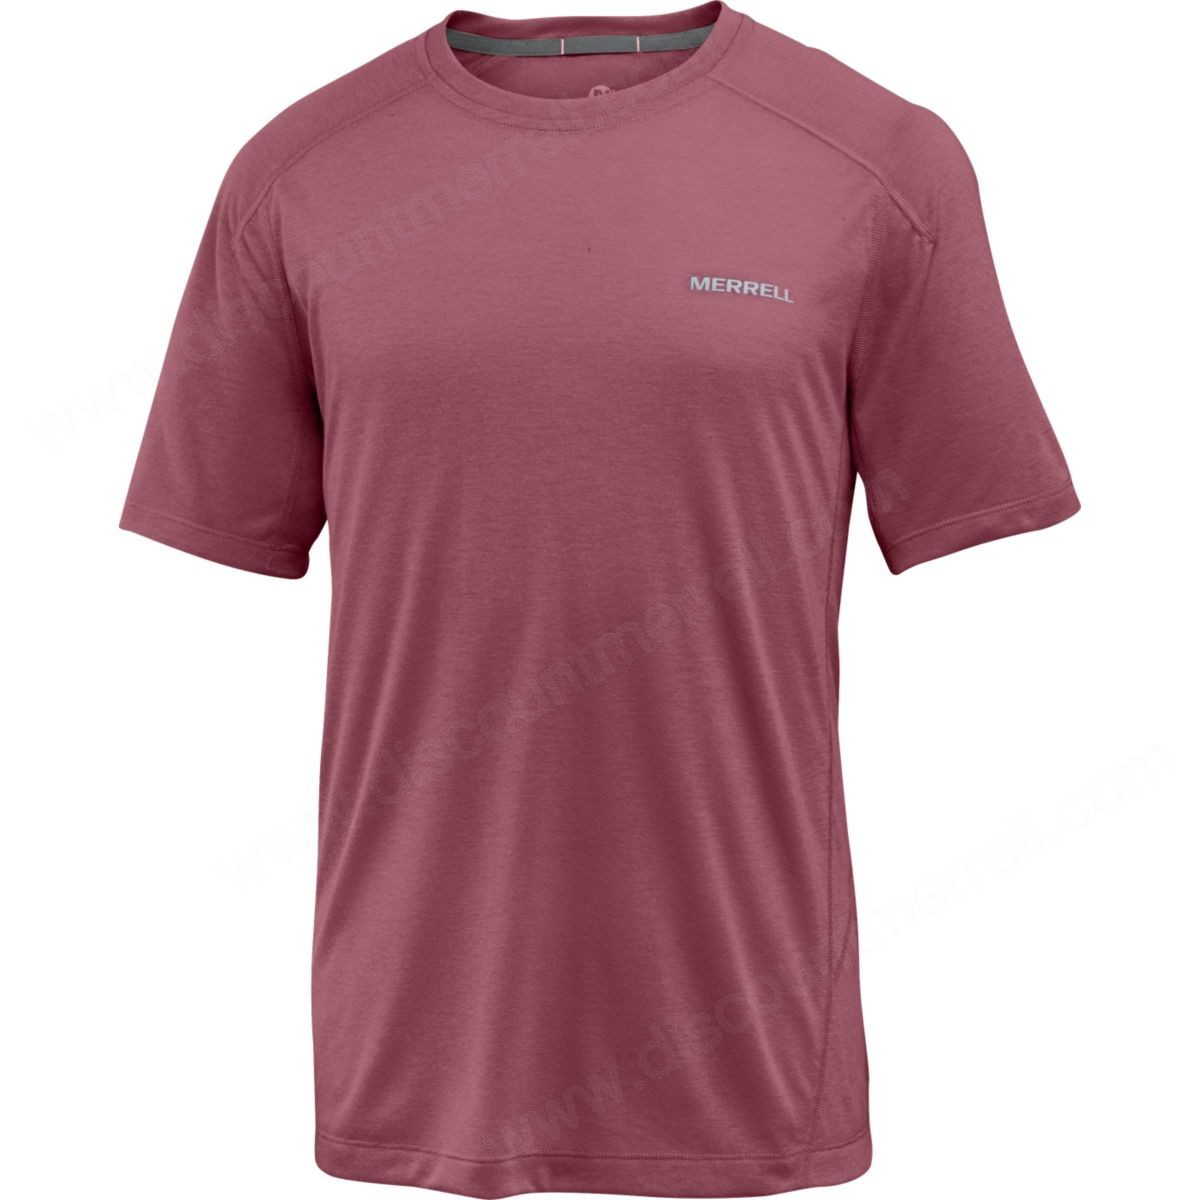 Merrell Mens's Paradox Short Sleeve Tech Tshirt With Drirelease® Fabric Wine-Tasting - -0